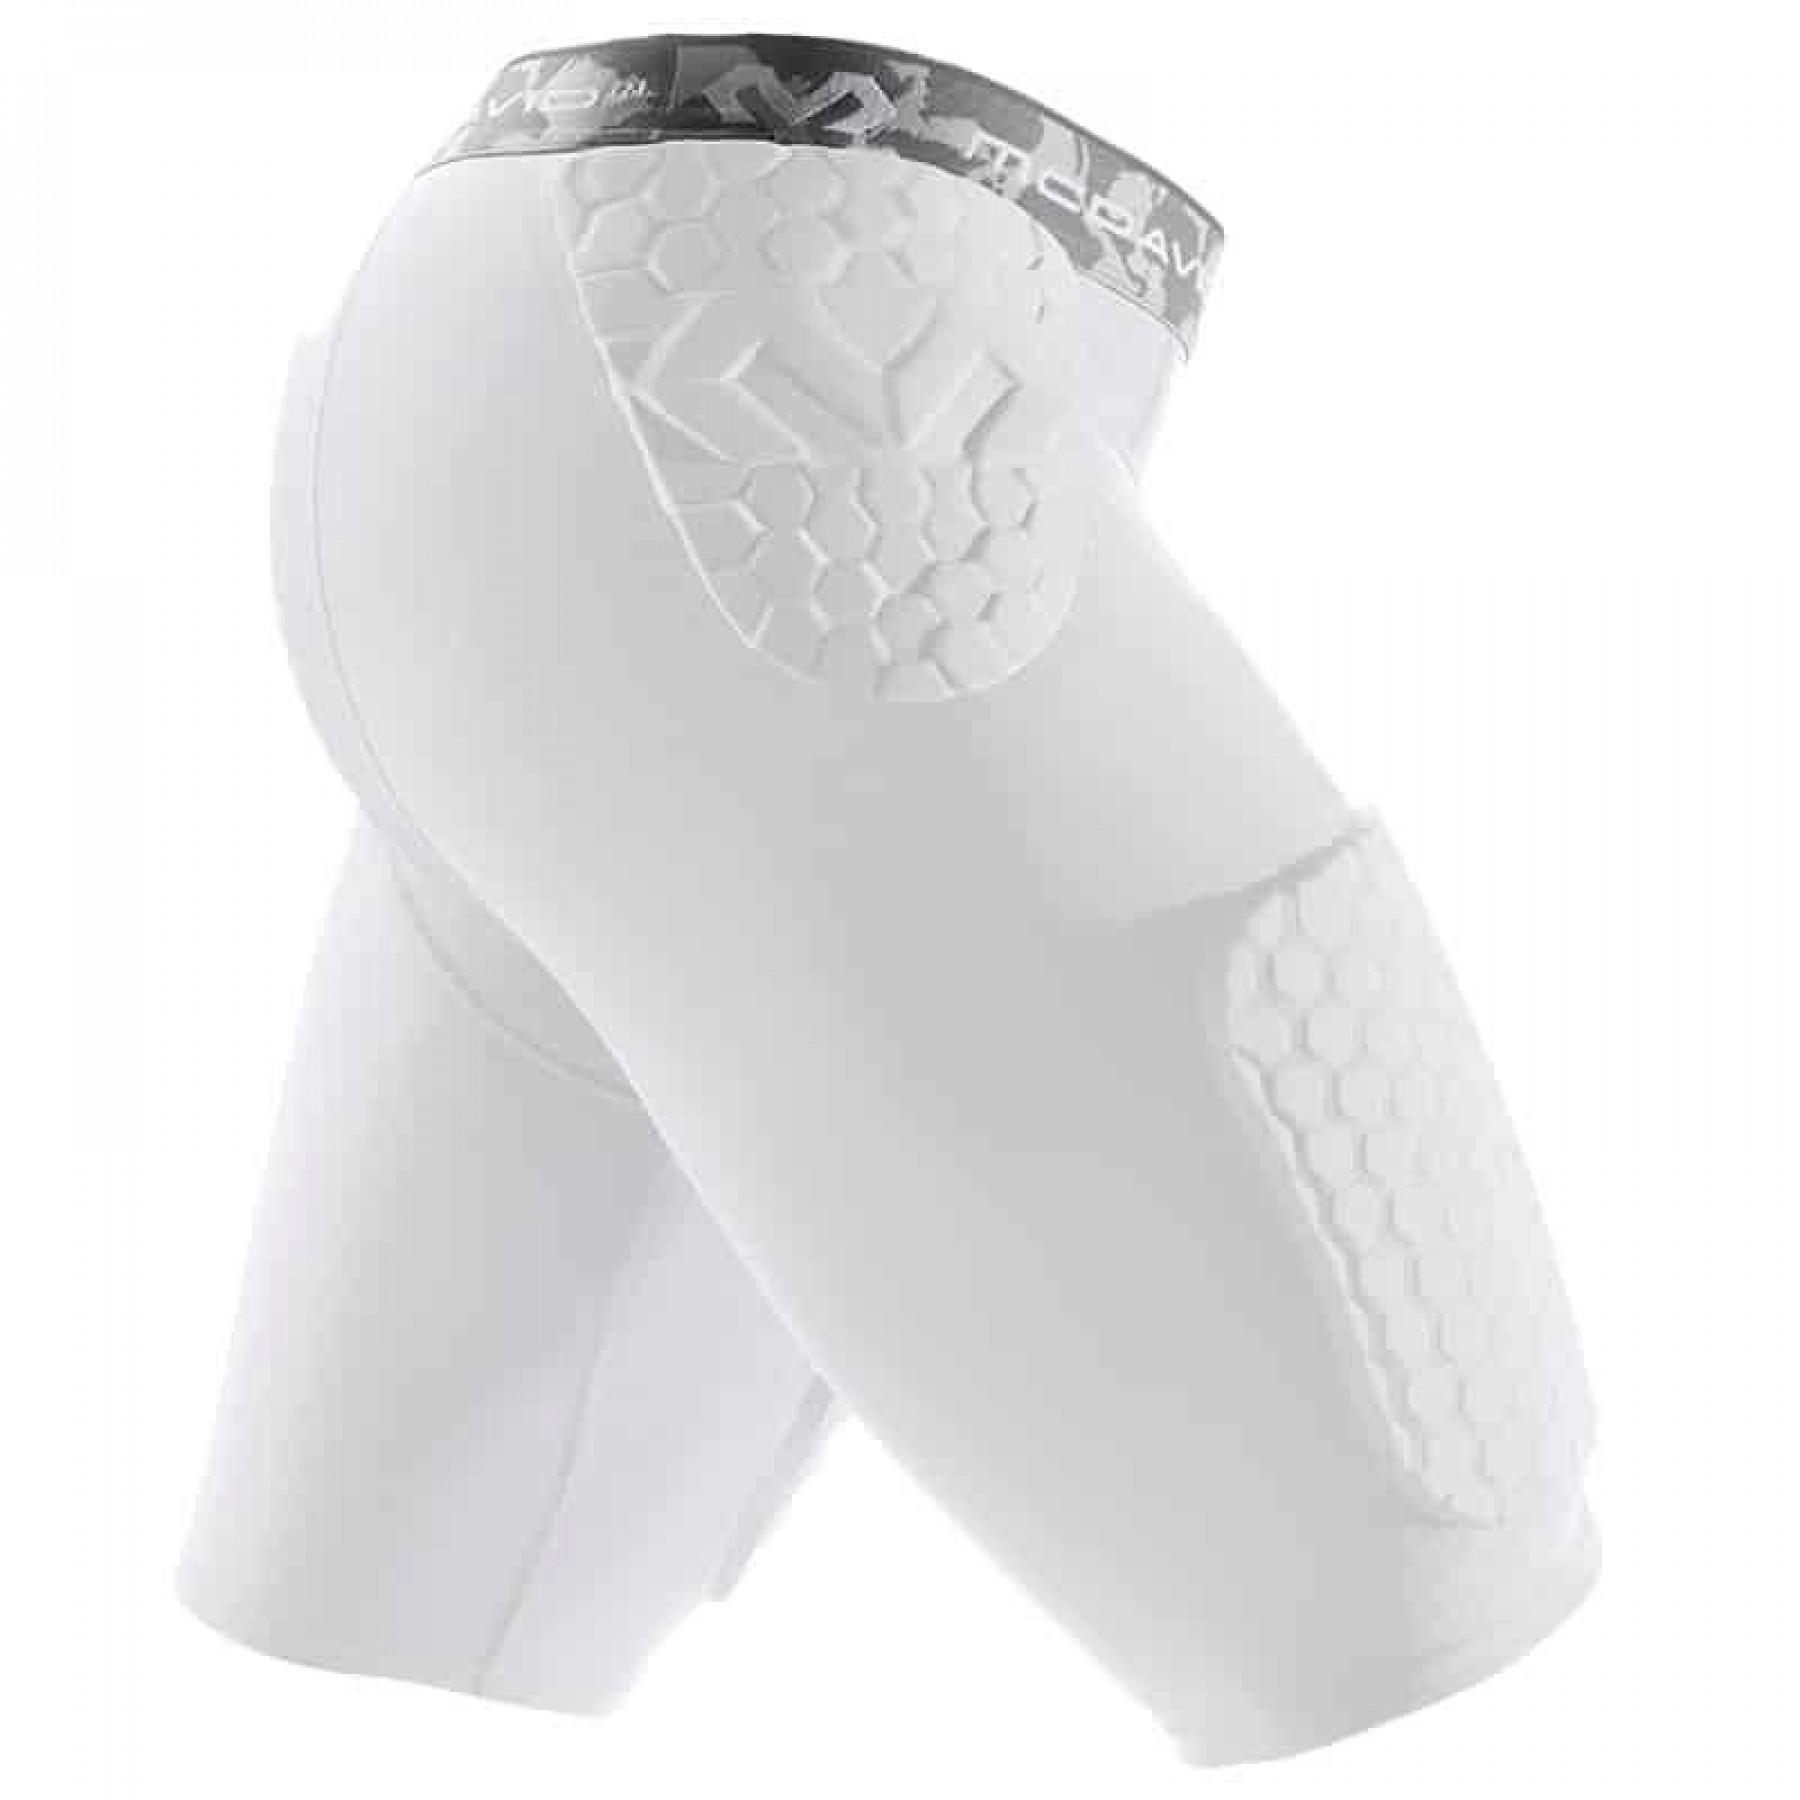 Protective Shorts McDavid Hex - McDavid - Brands - Equipment